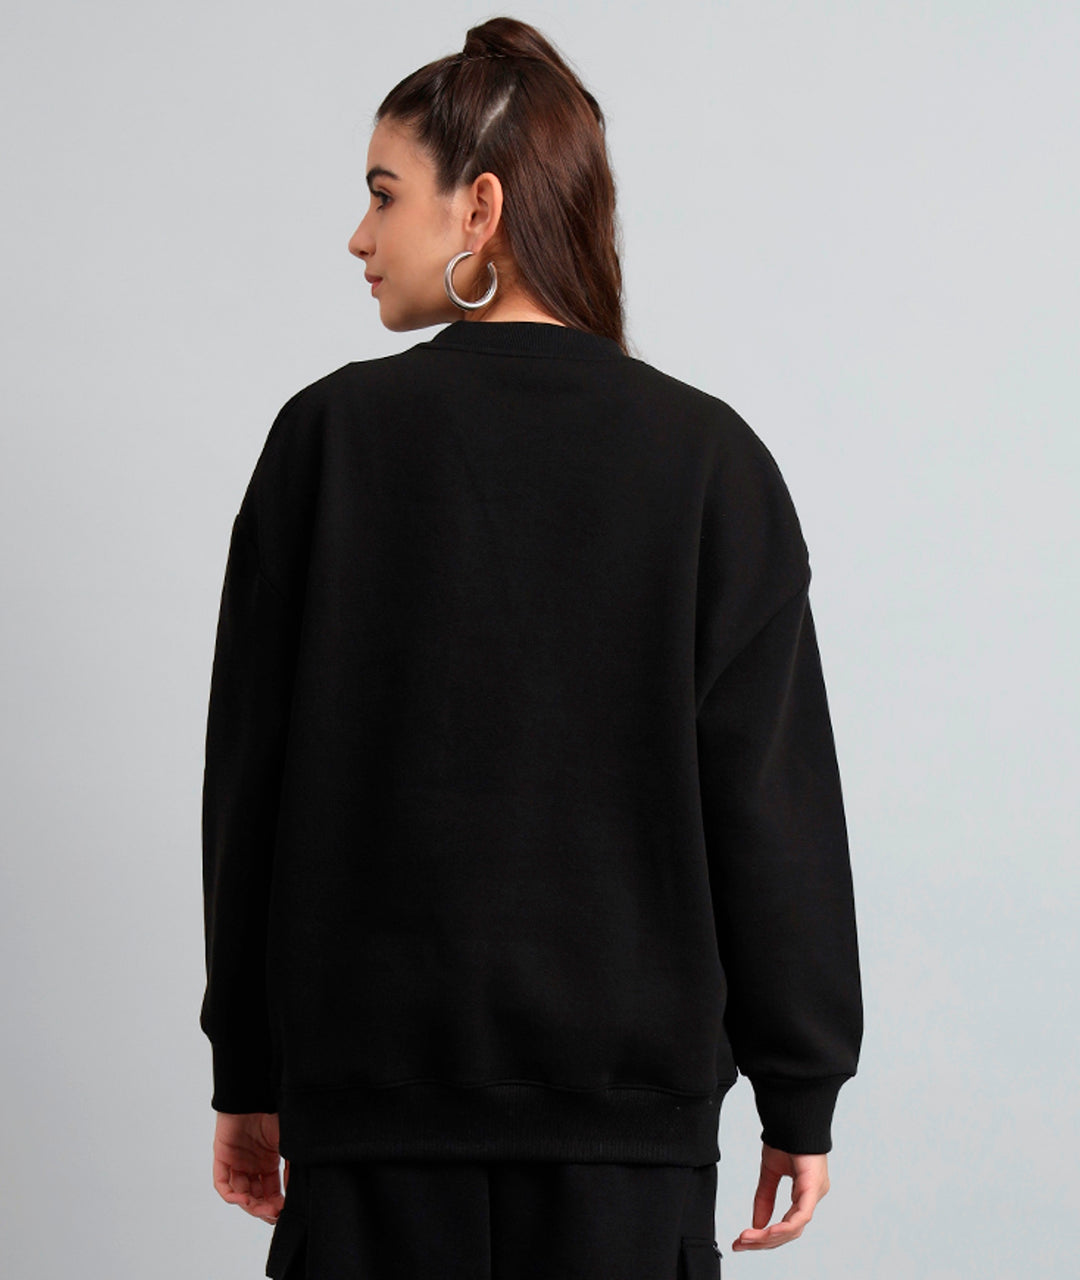 Griffel Women's Black Fron Logo Oversized Round Neck 100% Cotton Fleece Sweatshirt - griffel